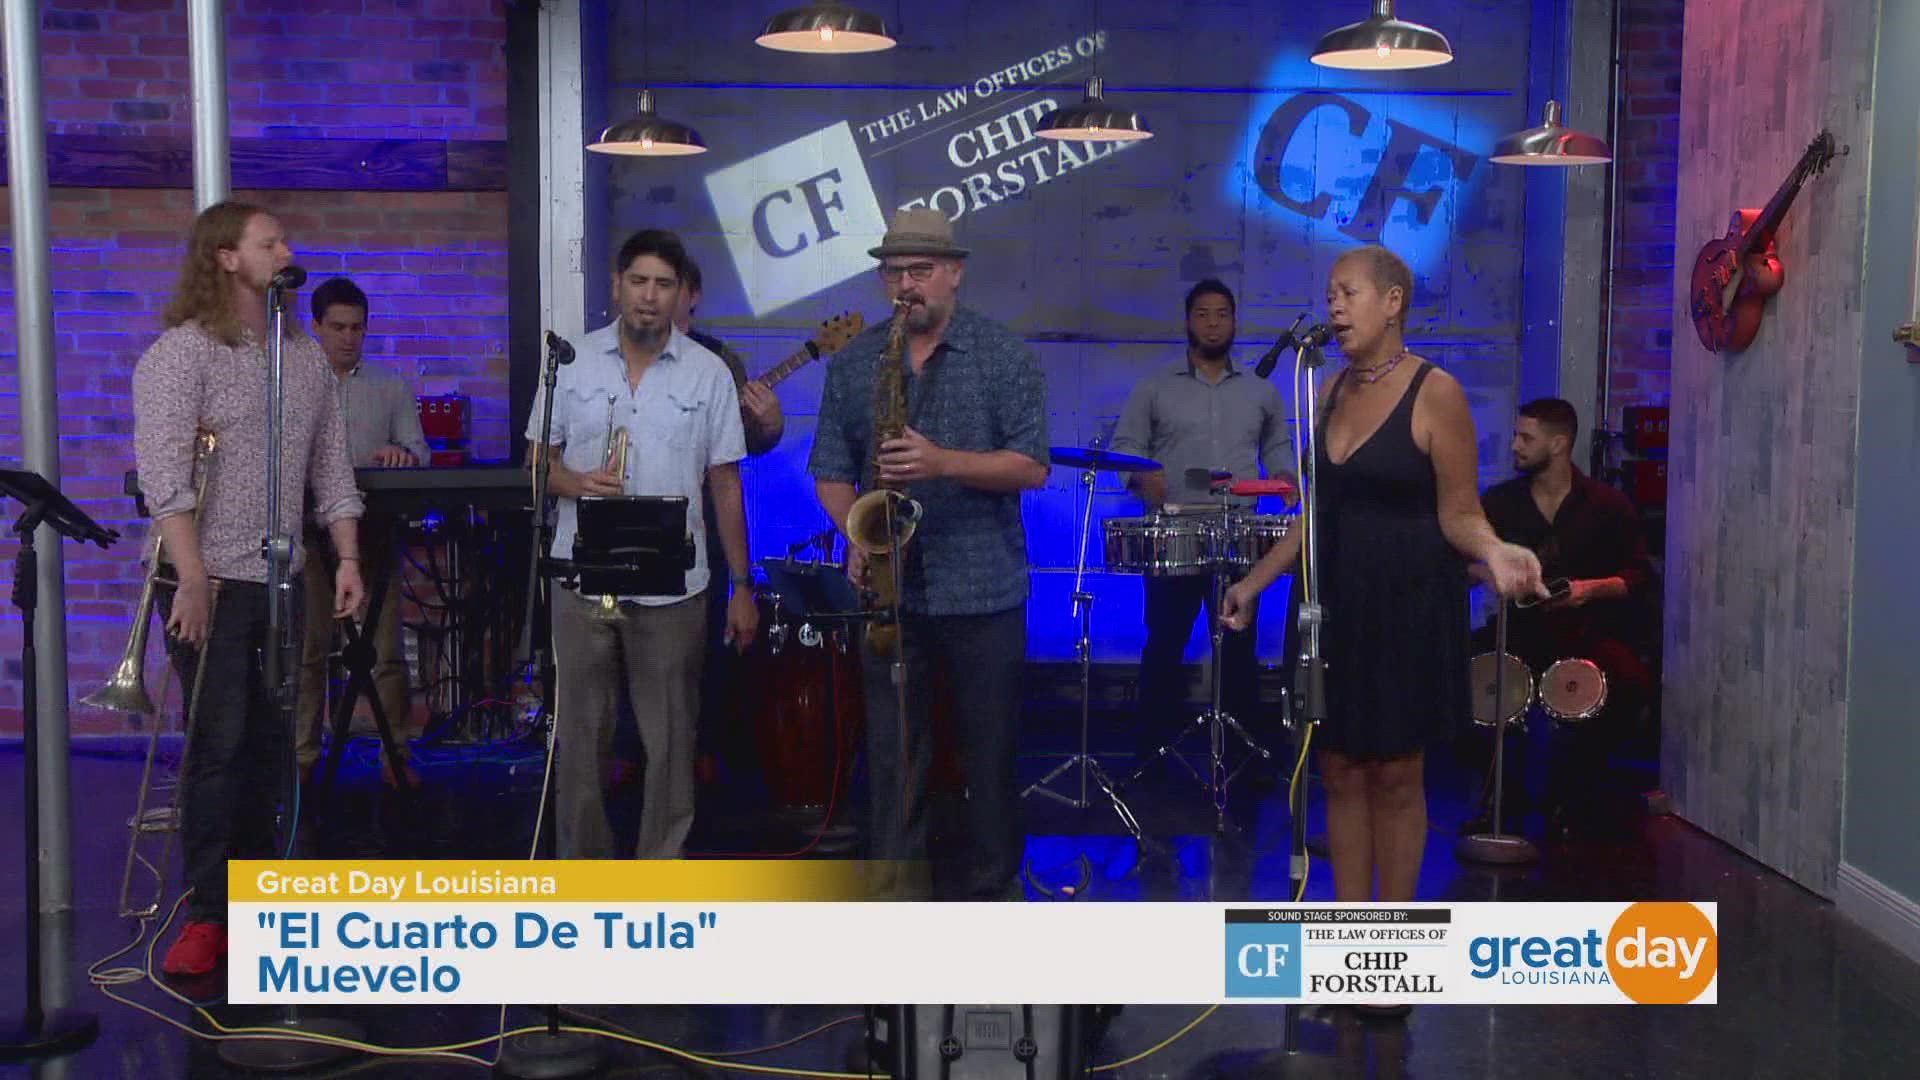 The local Cuban band performed "El Cuarto De Tula"